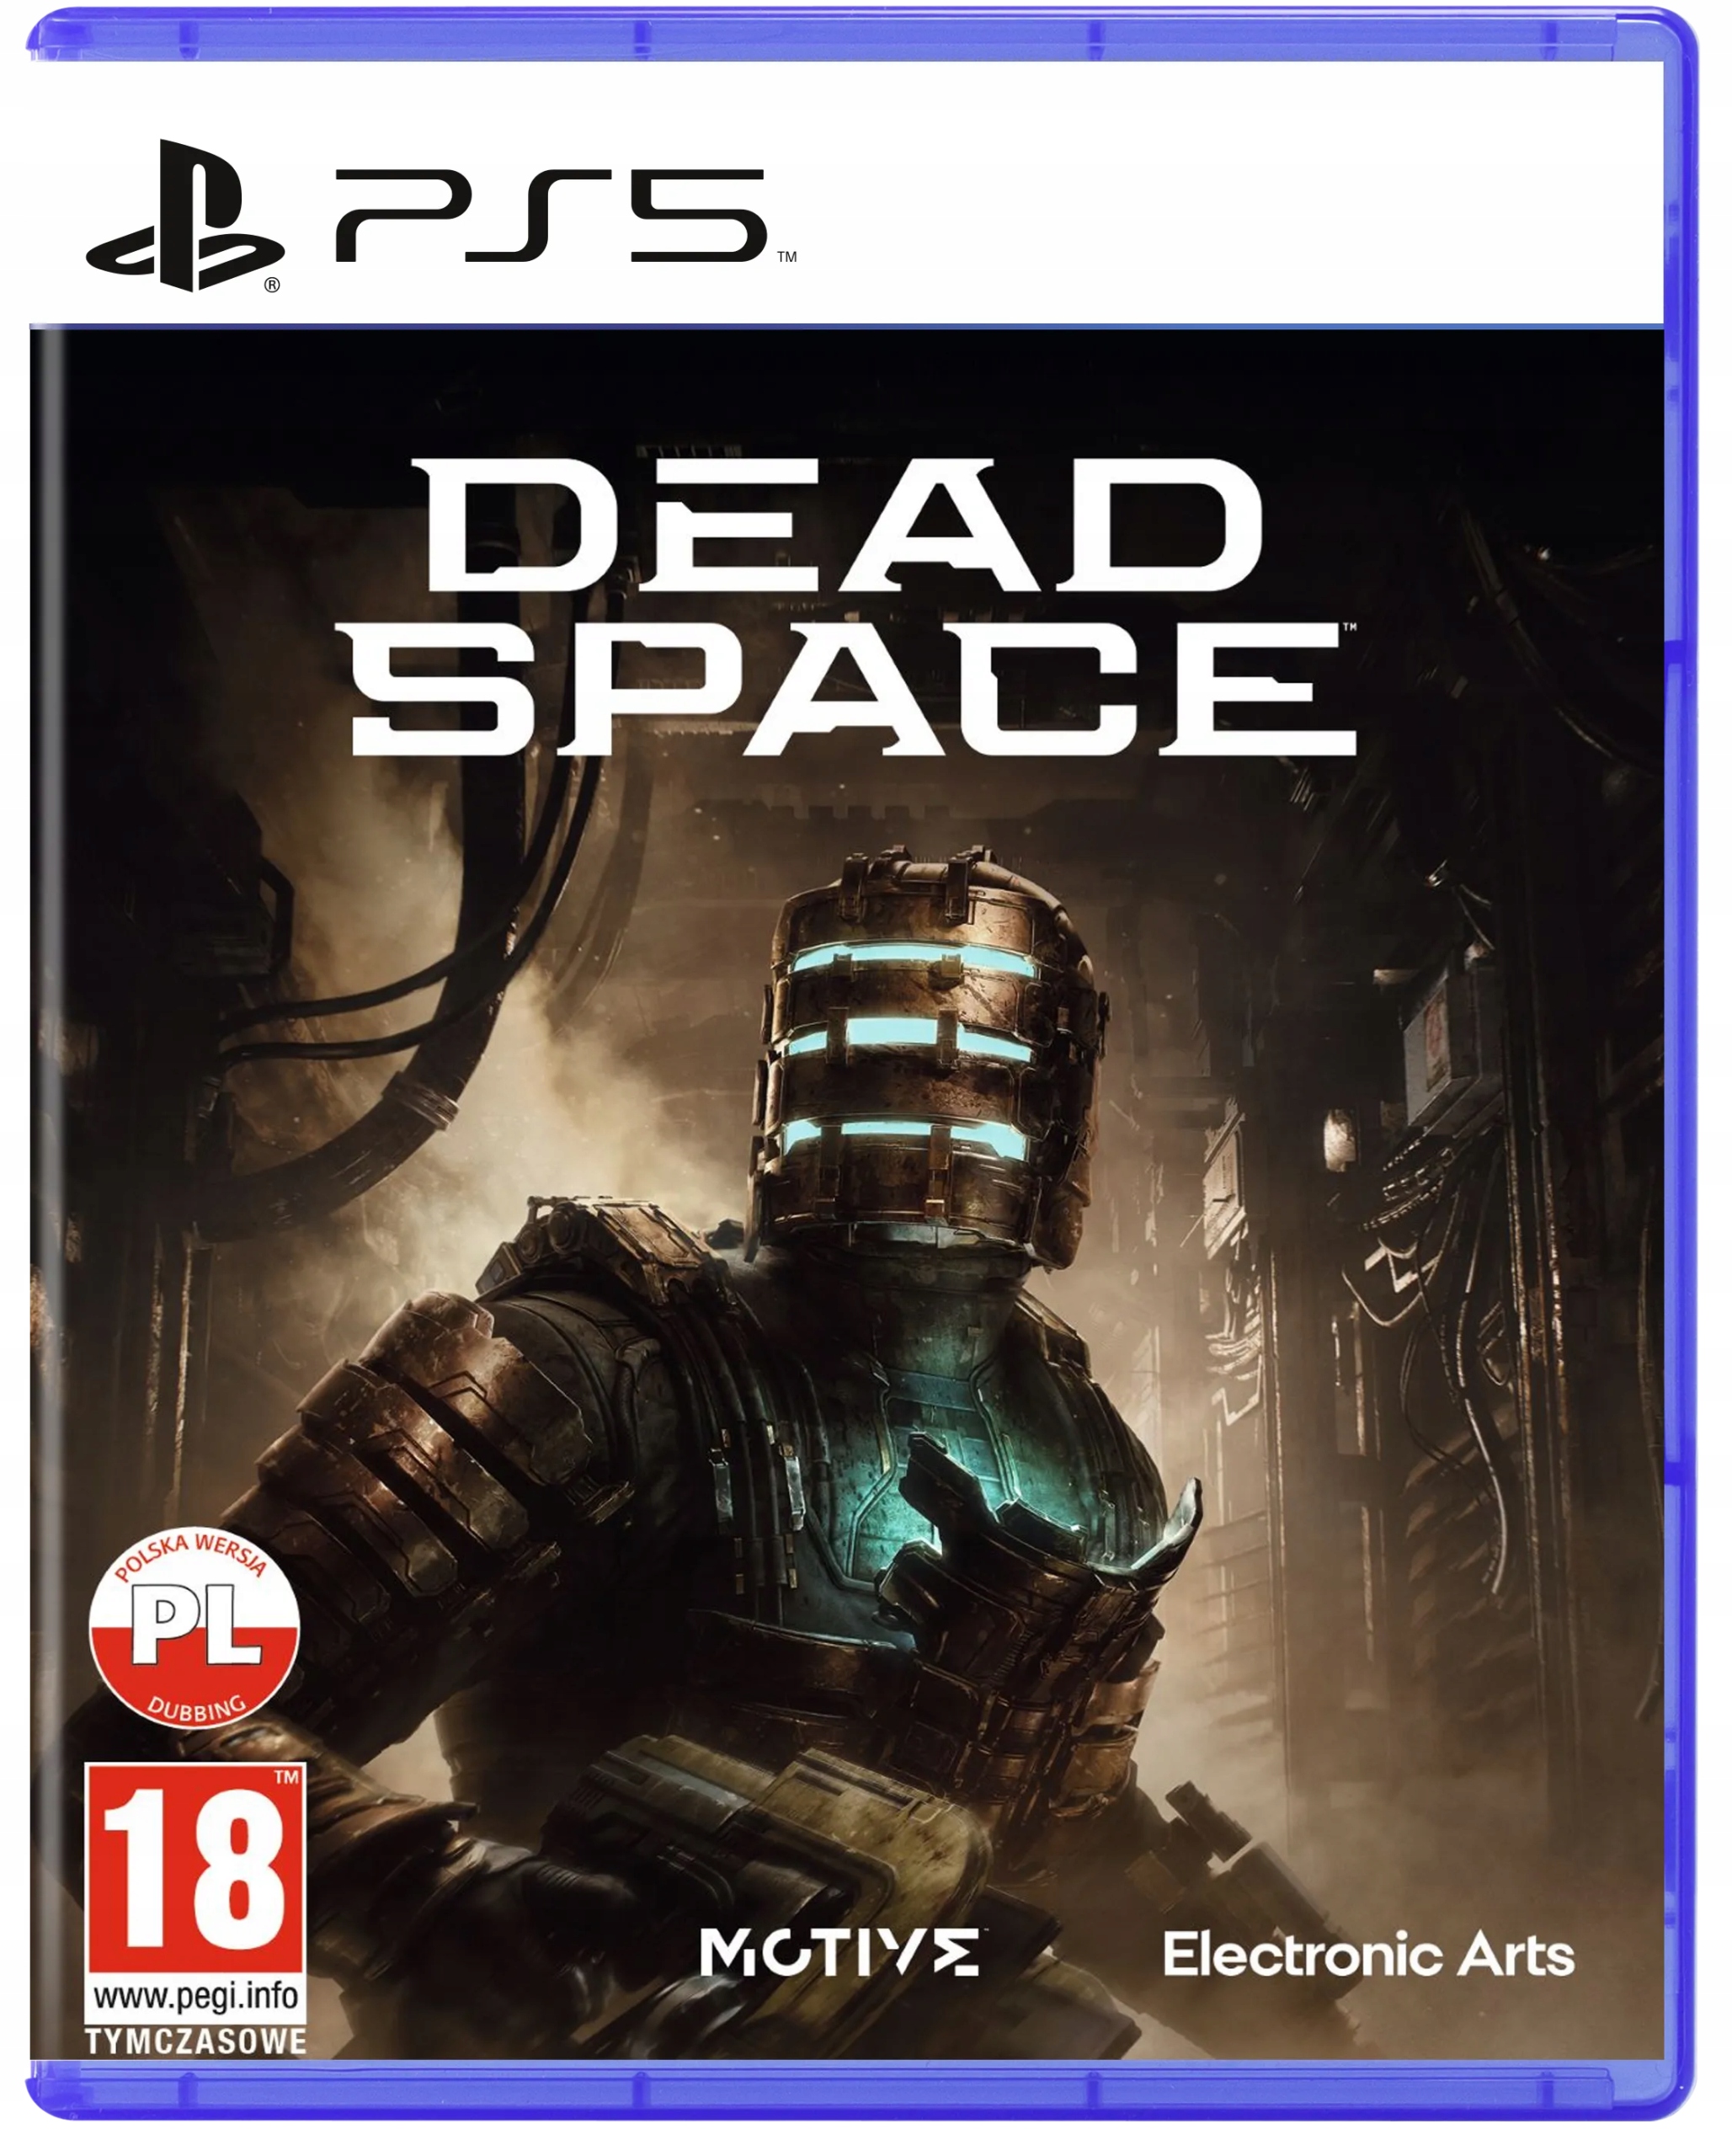 Игра dead space отзывы. Dead Space Remake ps5. Дед Спейс 1 ремейк. Дед Спейс 3 пс4. Dead Space Remake обложка.